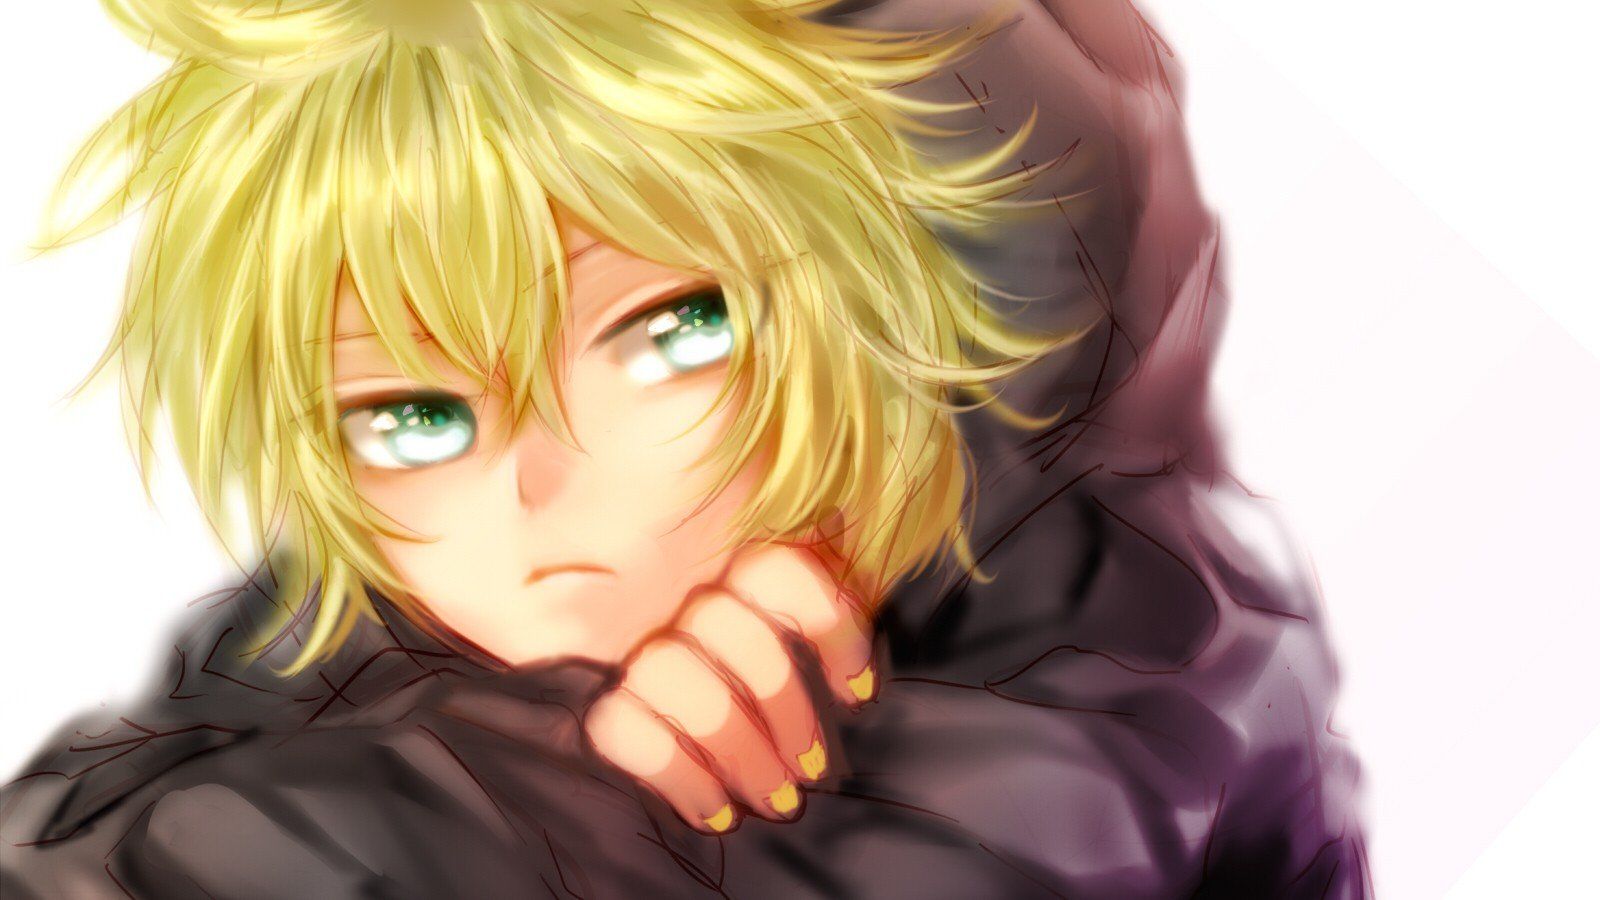 9. "Dull Blonde Hair Anime Boy" - wide 2